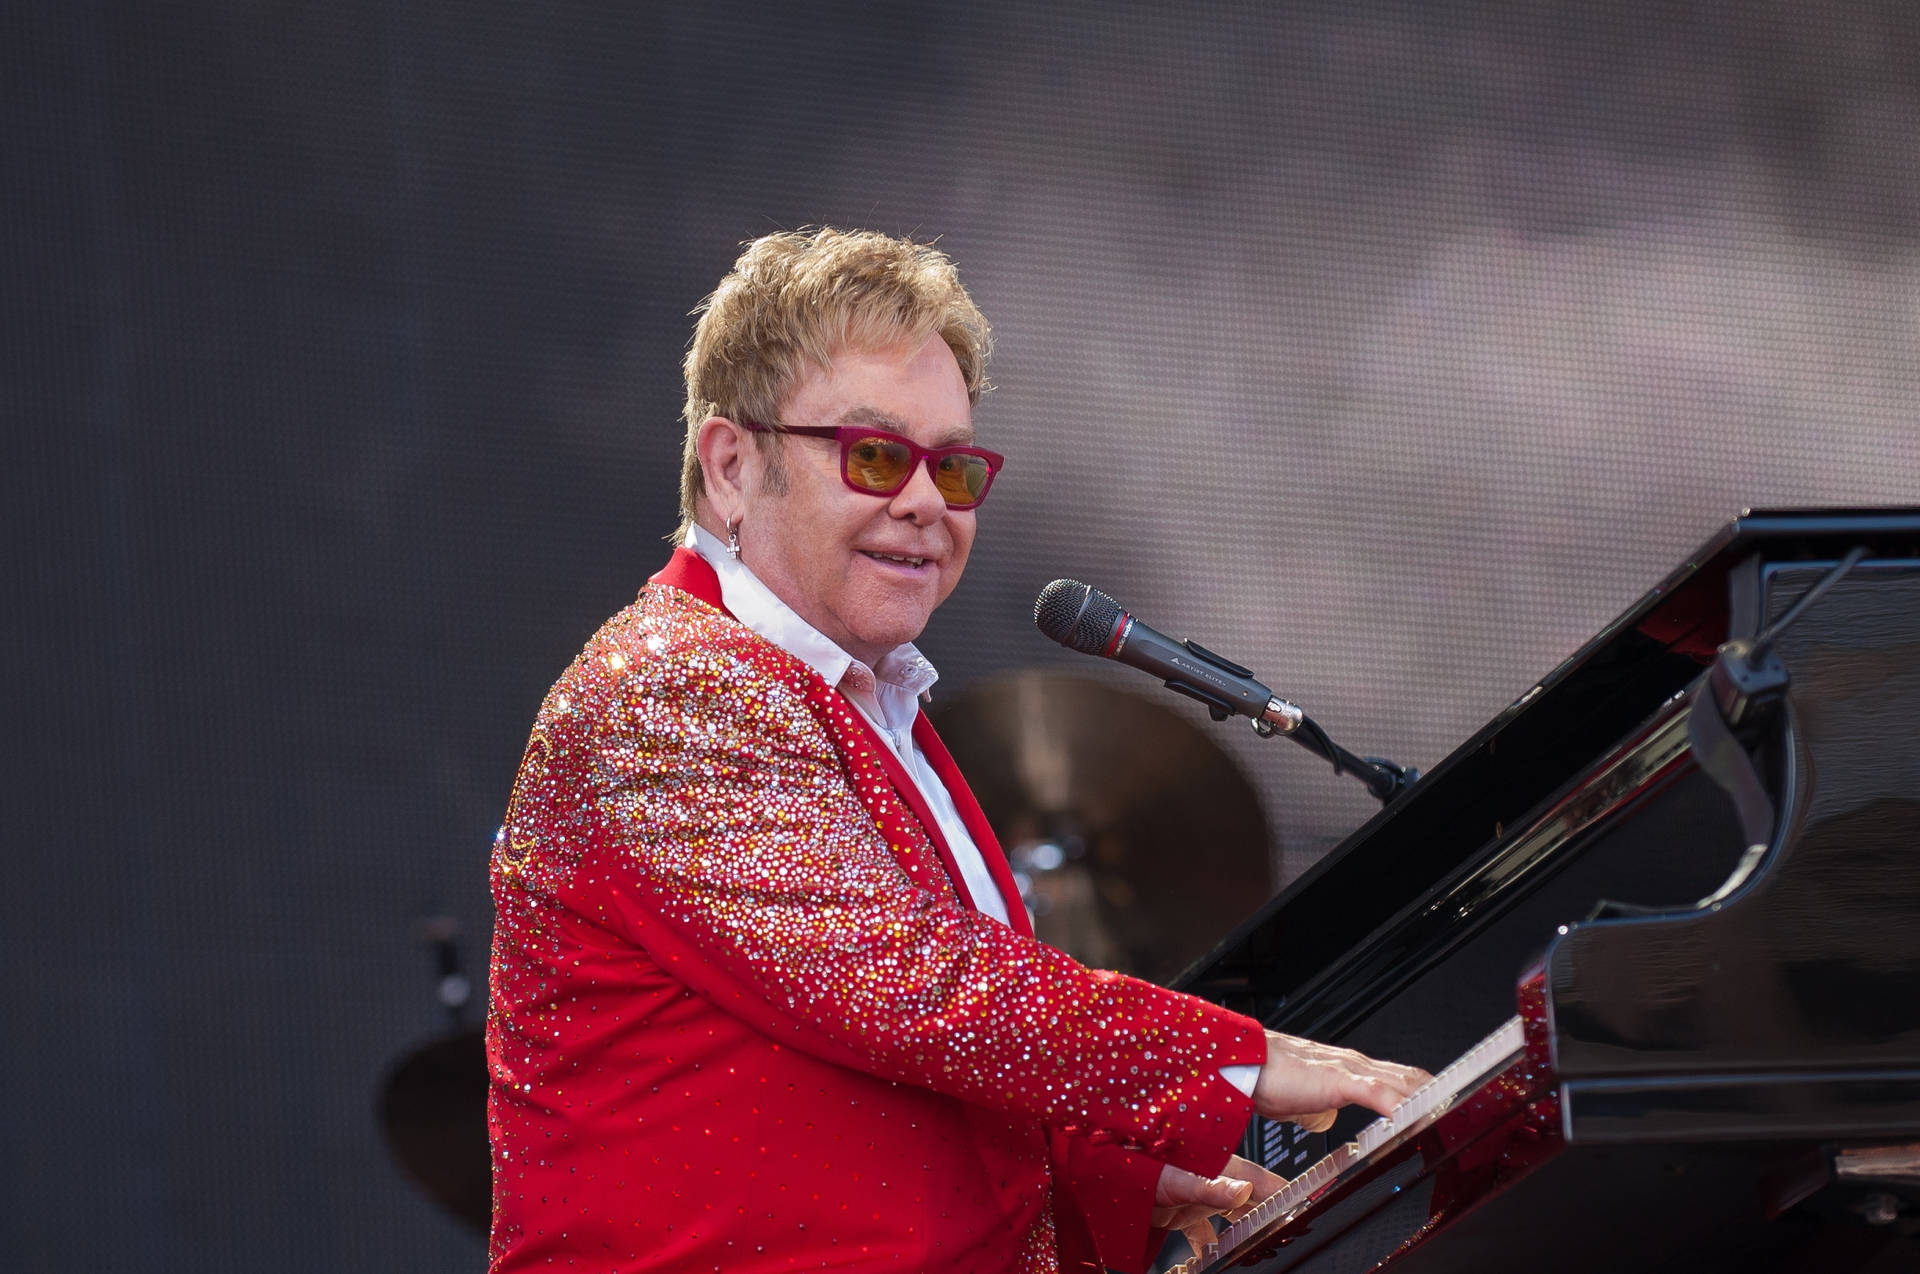 Elton John Pianist In Red Suit